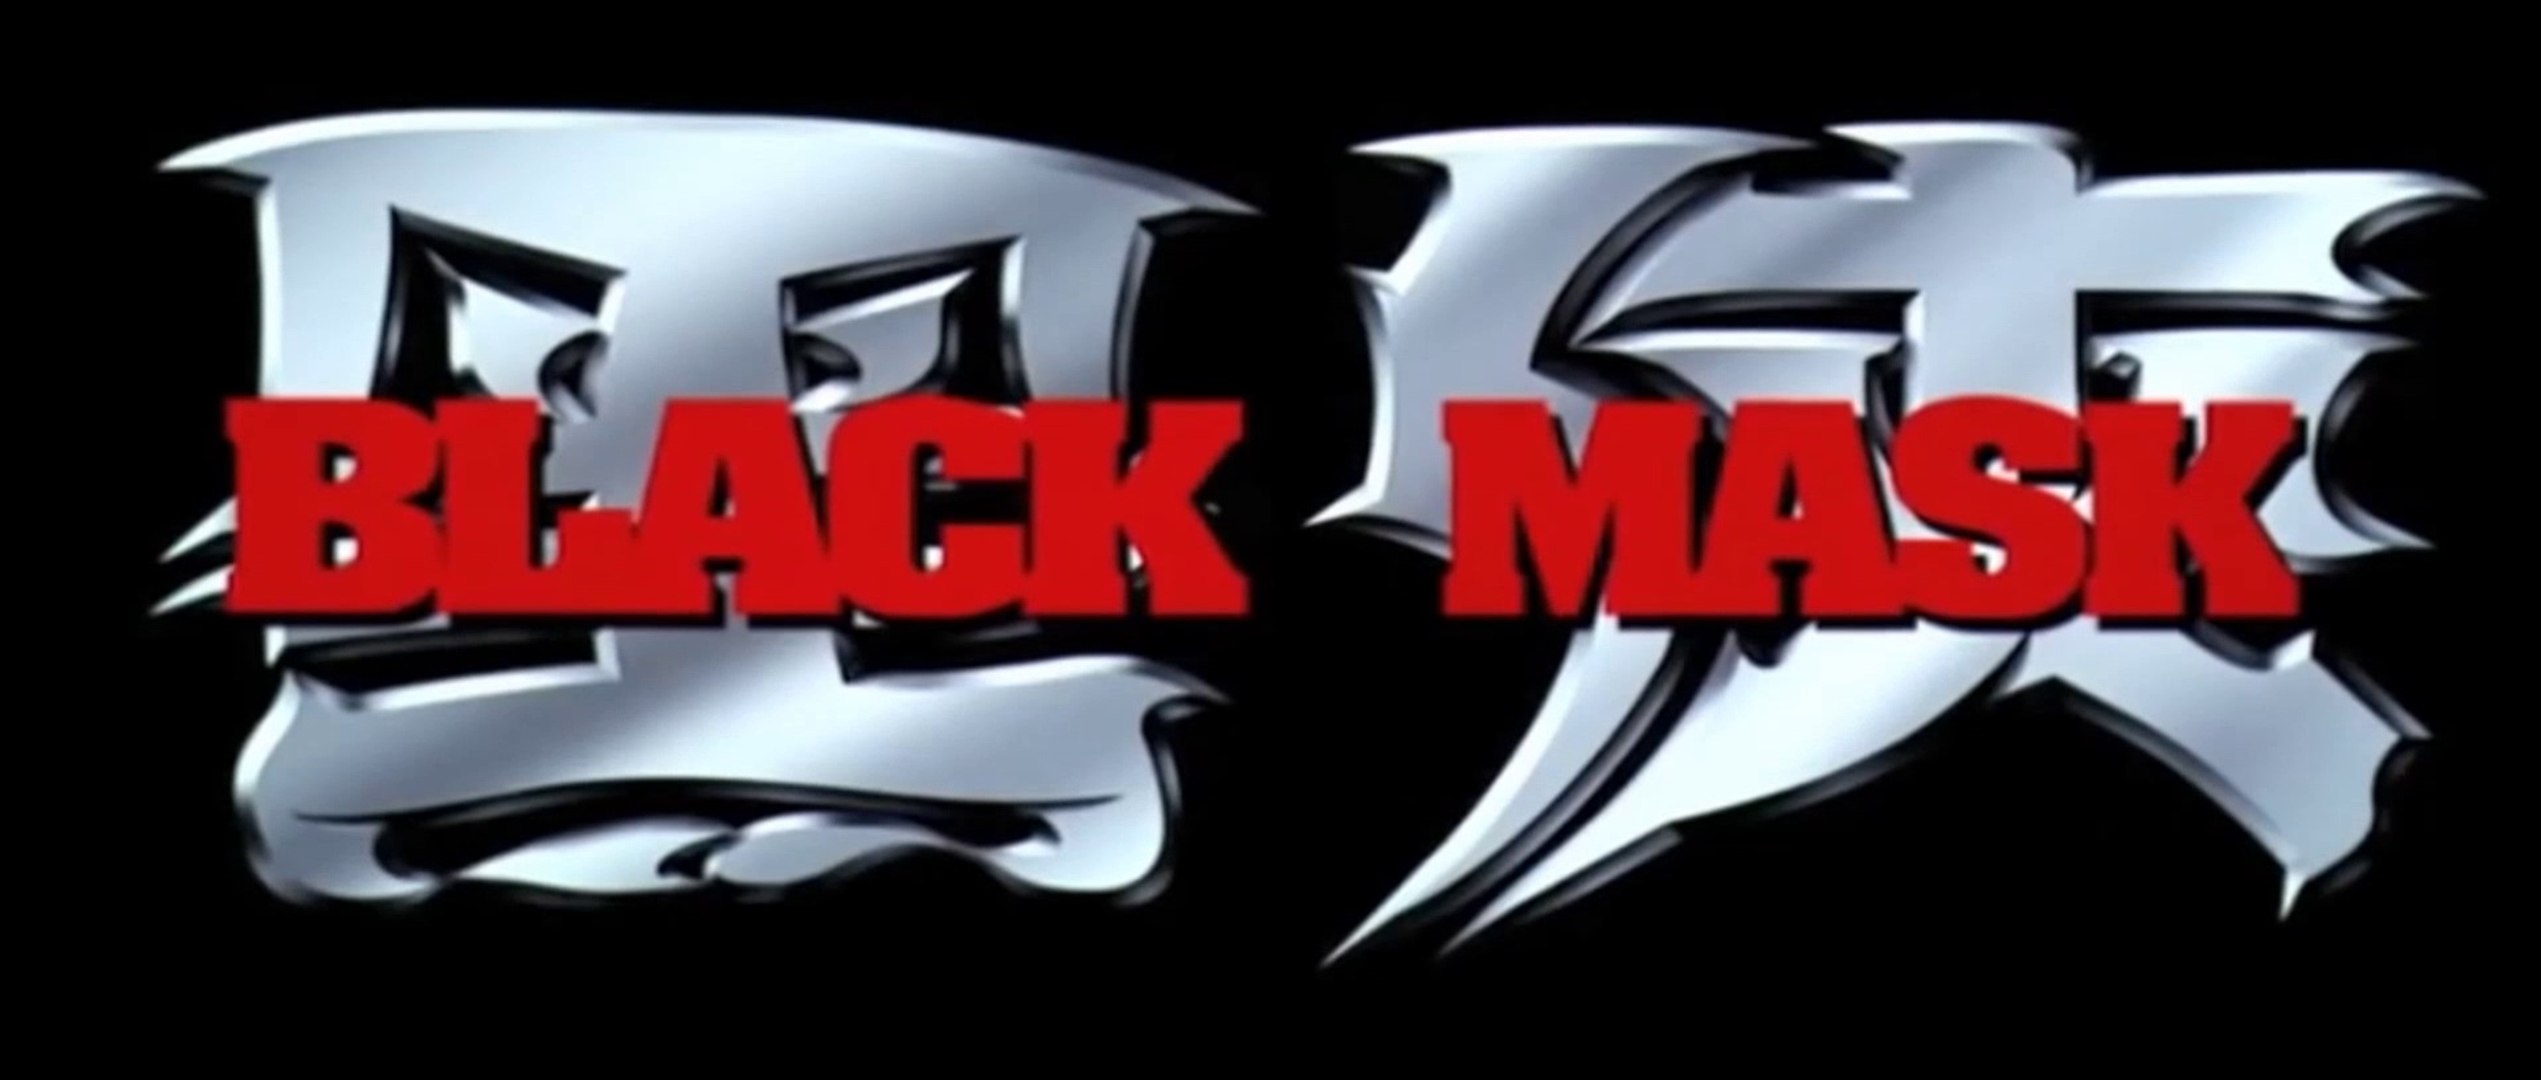 BLACK MASK (1996) Trailer - HD - Vidéo Dailymotion